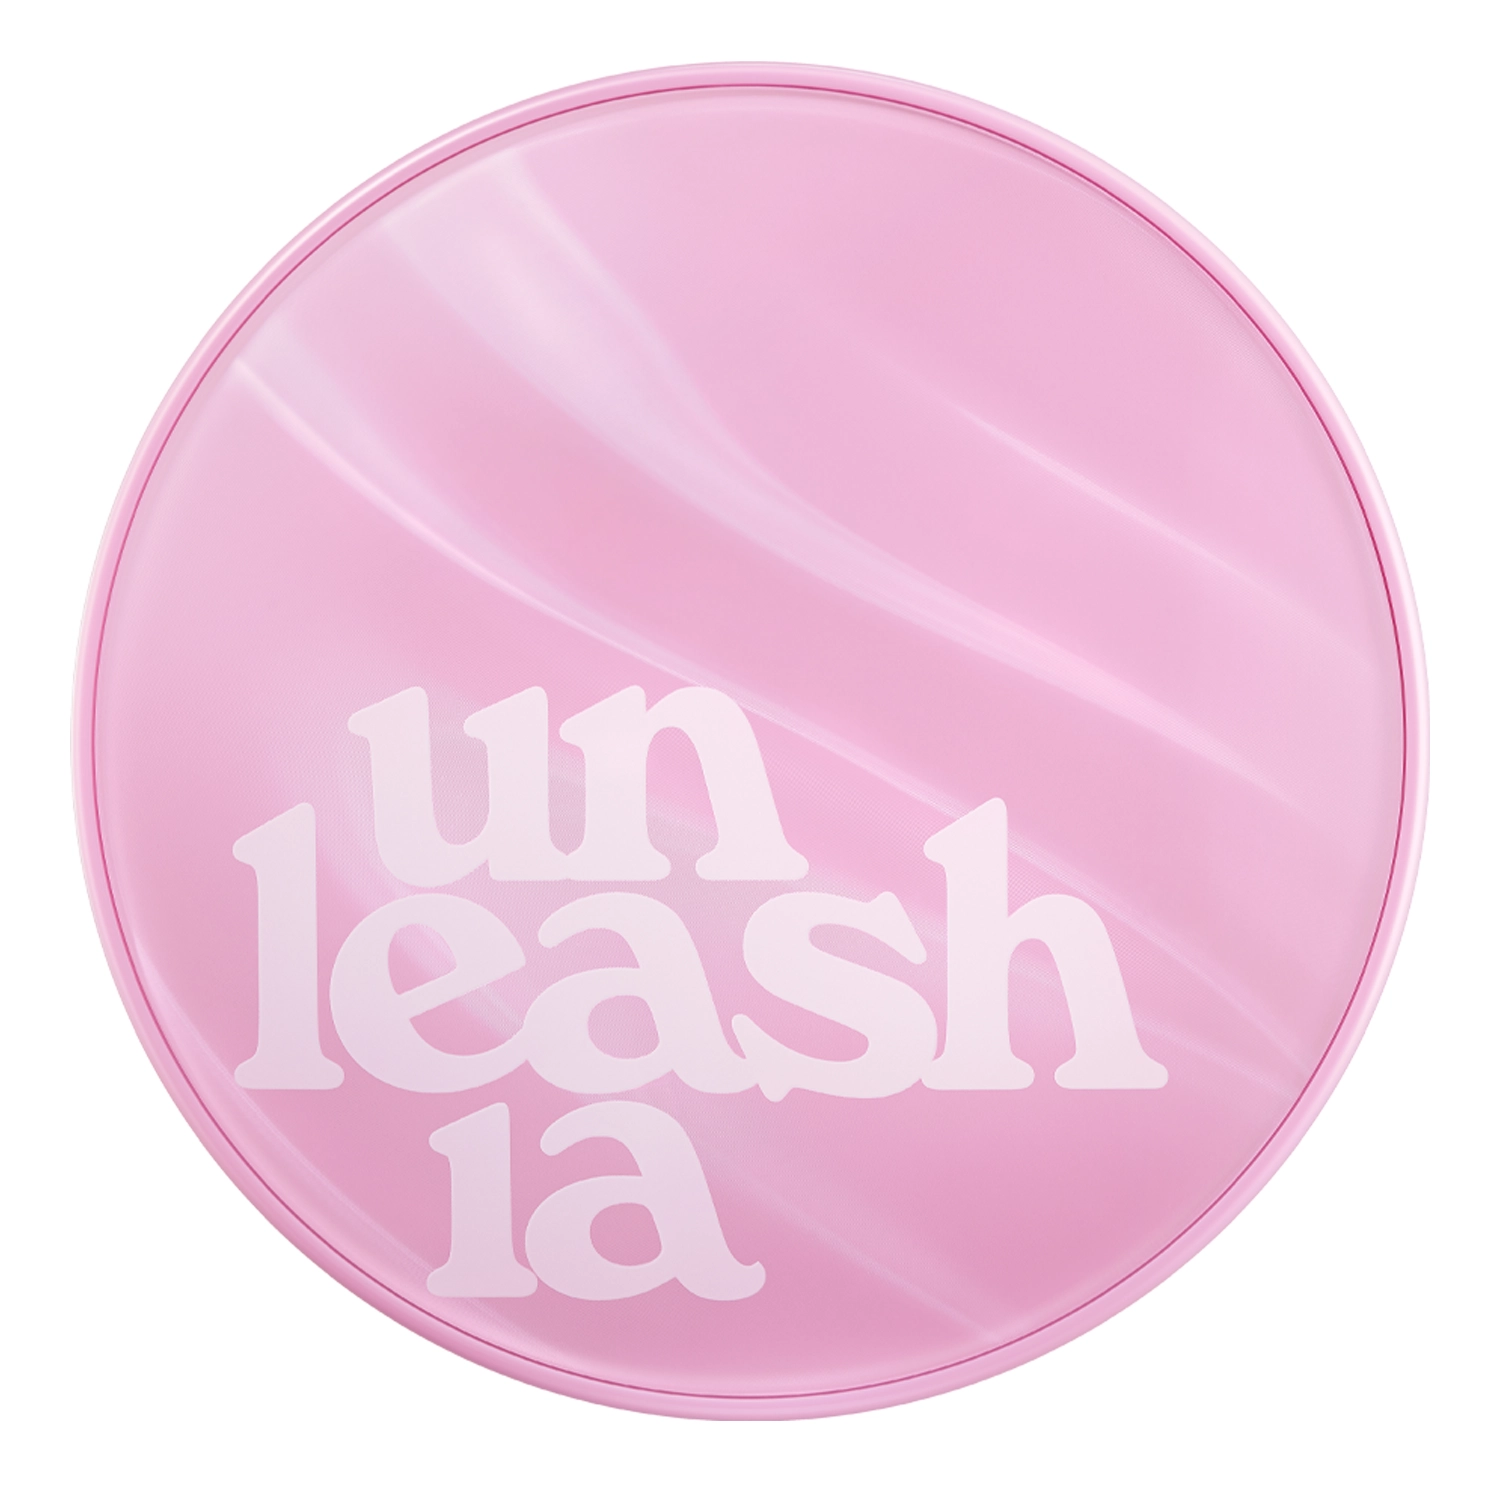 Unleashia - Don't Touch Glass Pink Cushion SPF50+ PA++++ - Тональный кушон - #25N Molten - 15g